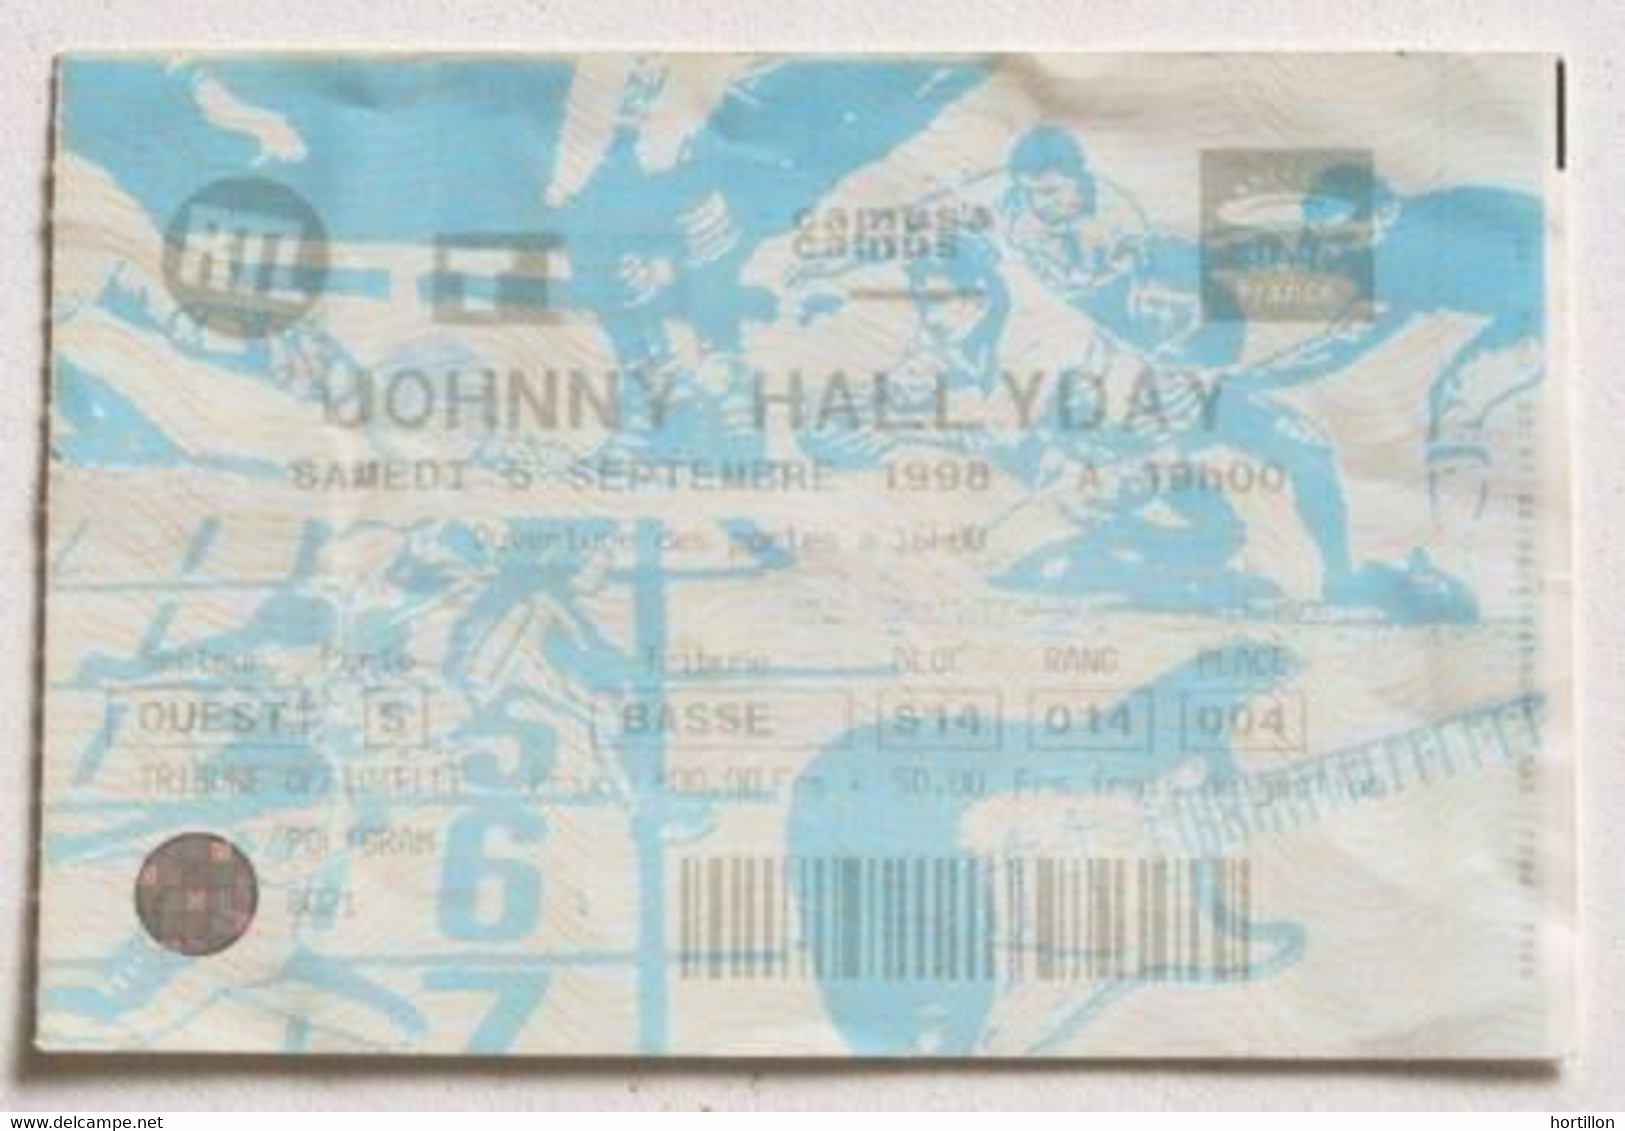 JOHNNY HALLYDAY Billet Ticket Concert FRANCE Paris Stade De France 05/09/1998 - Konzertkarten